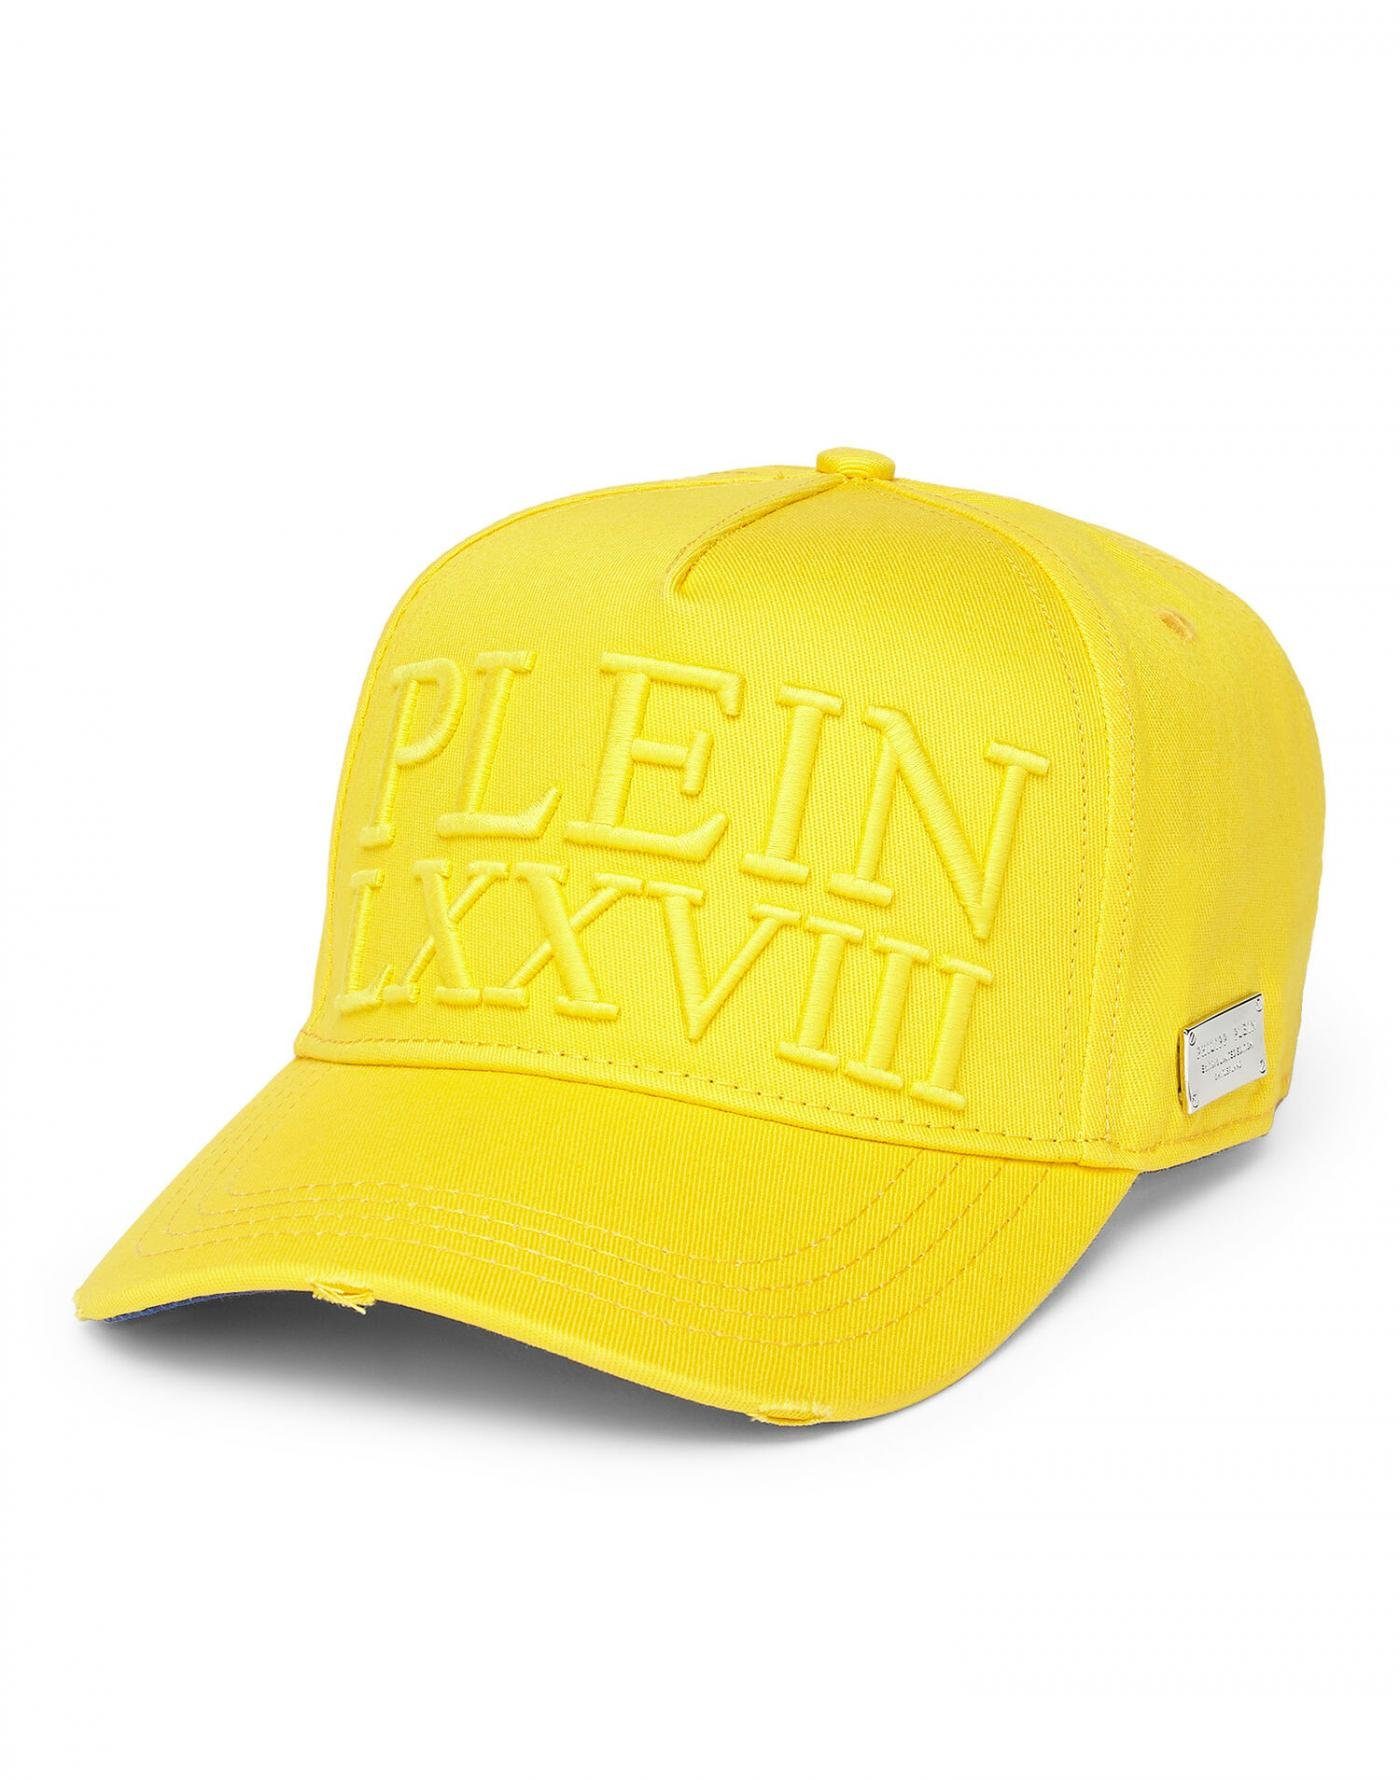 PHILIPP PLEIN Baseball Cap PHILIPP PLEIN Embroidered Baseballcap Gelb Yellow